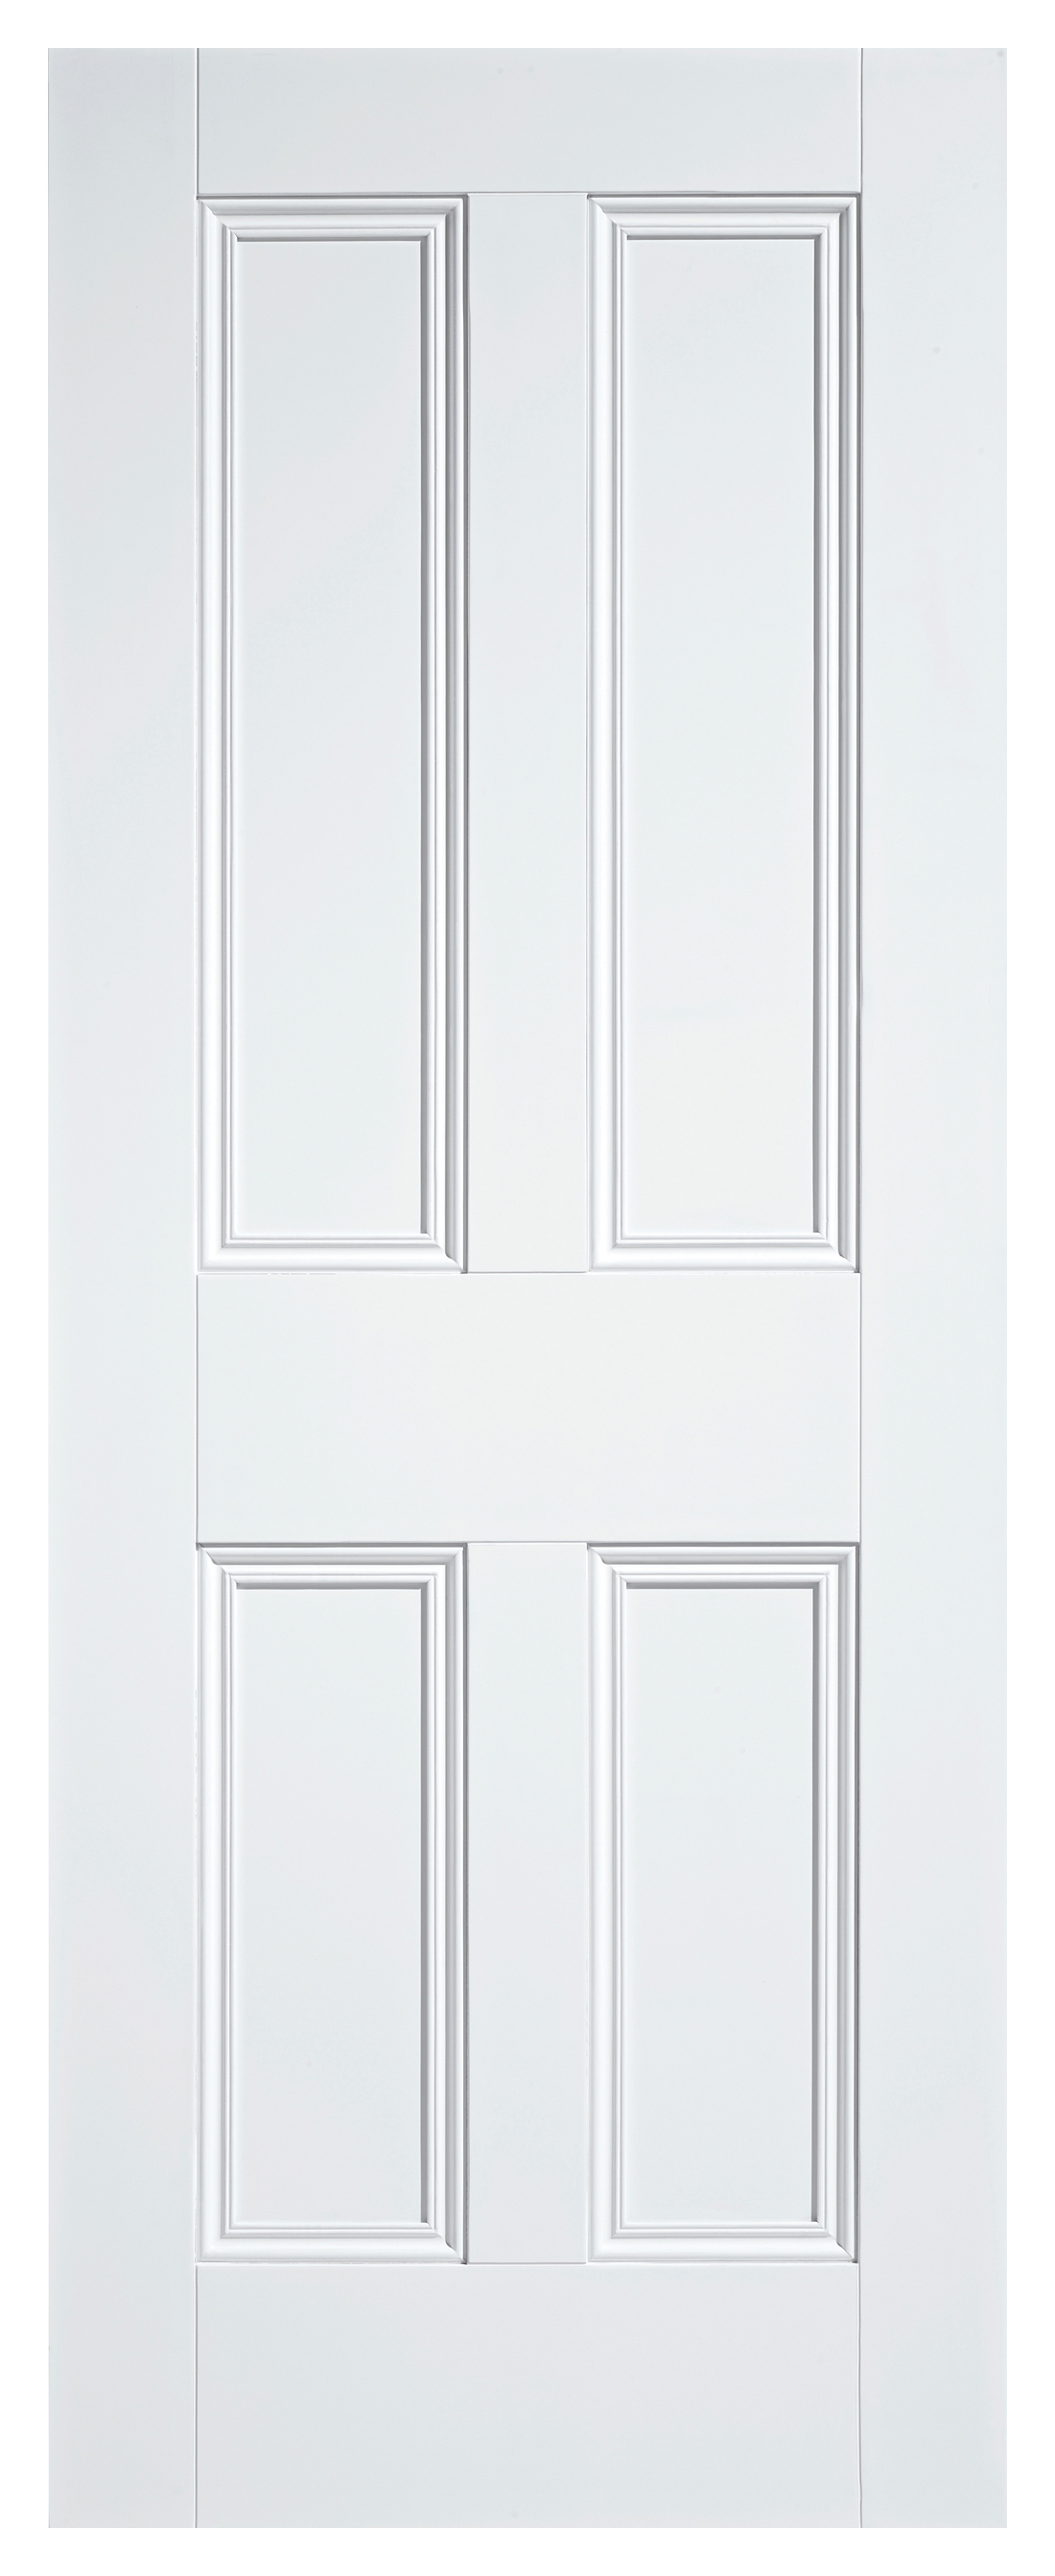 Image of LPD Internal 4 Panel Primed White Solid Core Door - 838 x 1981mm